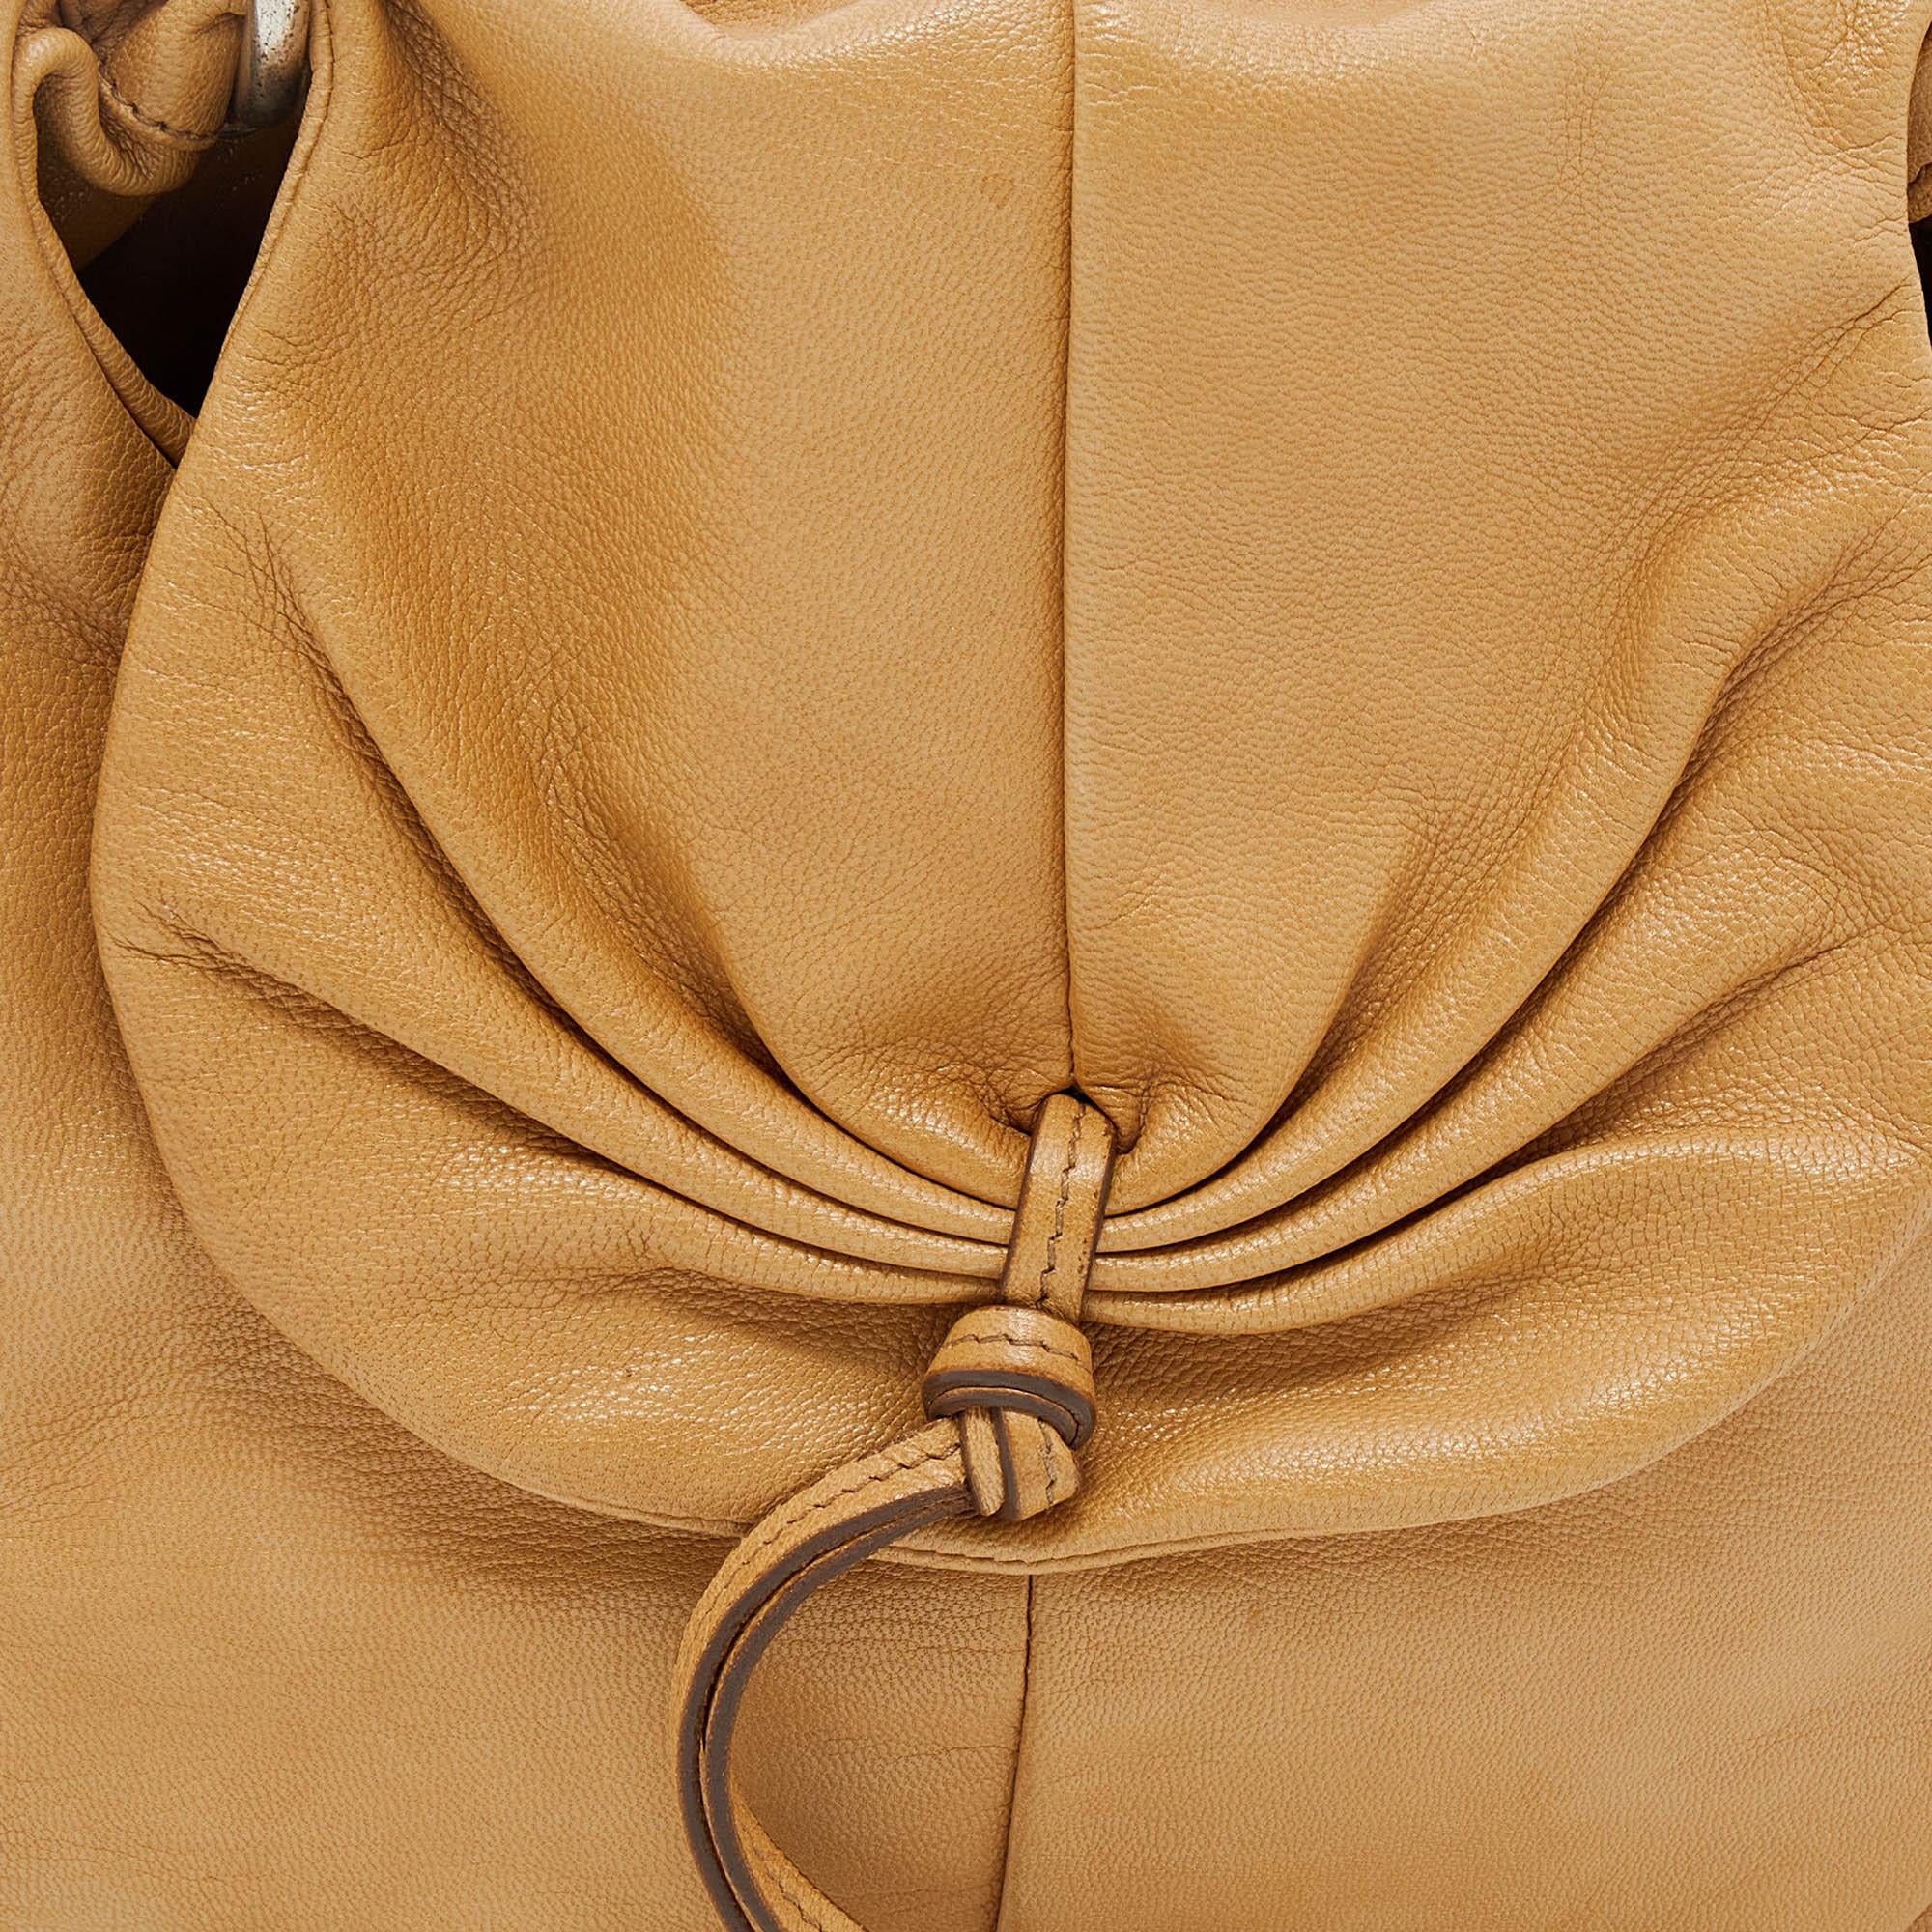 Yves Saint Laurent By Tom Ford Tan Leather Gathered Shoulder Bag 5